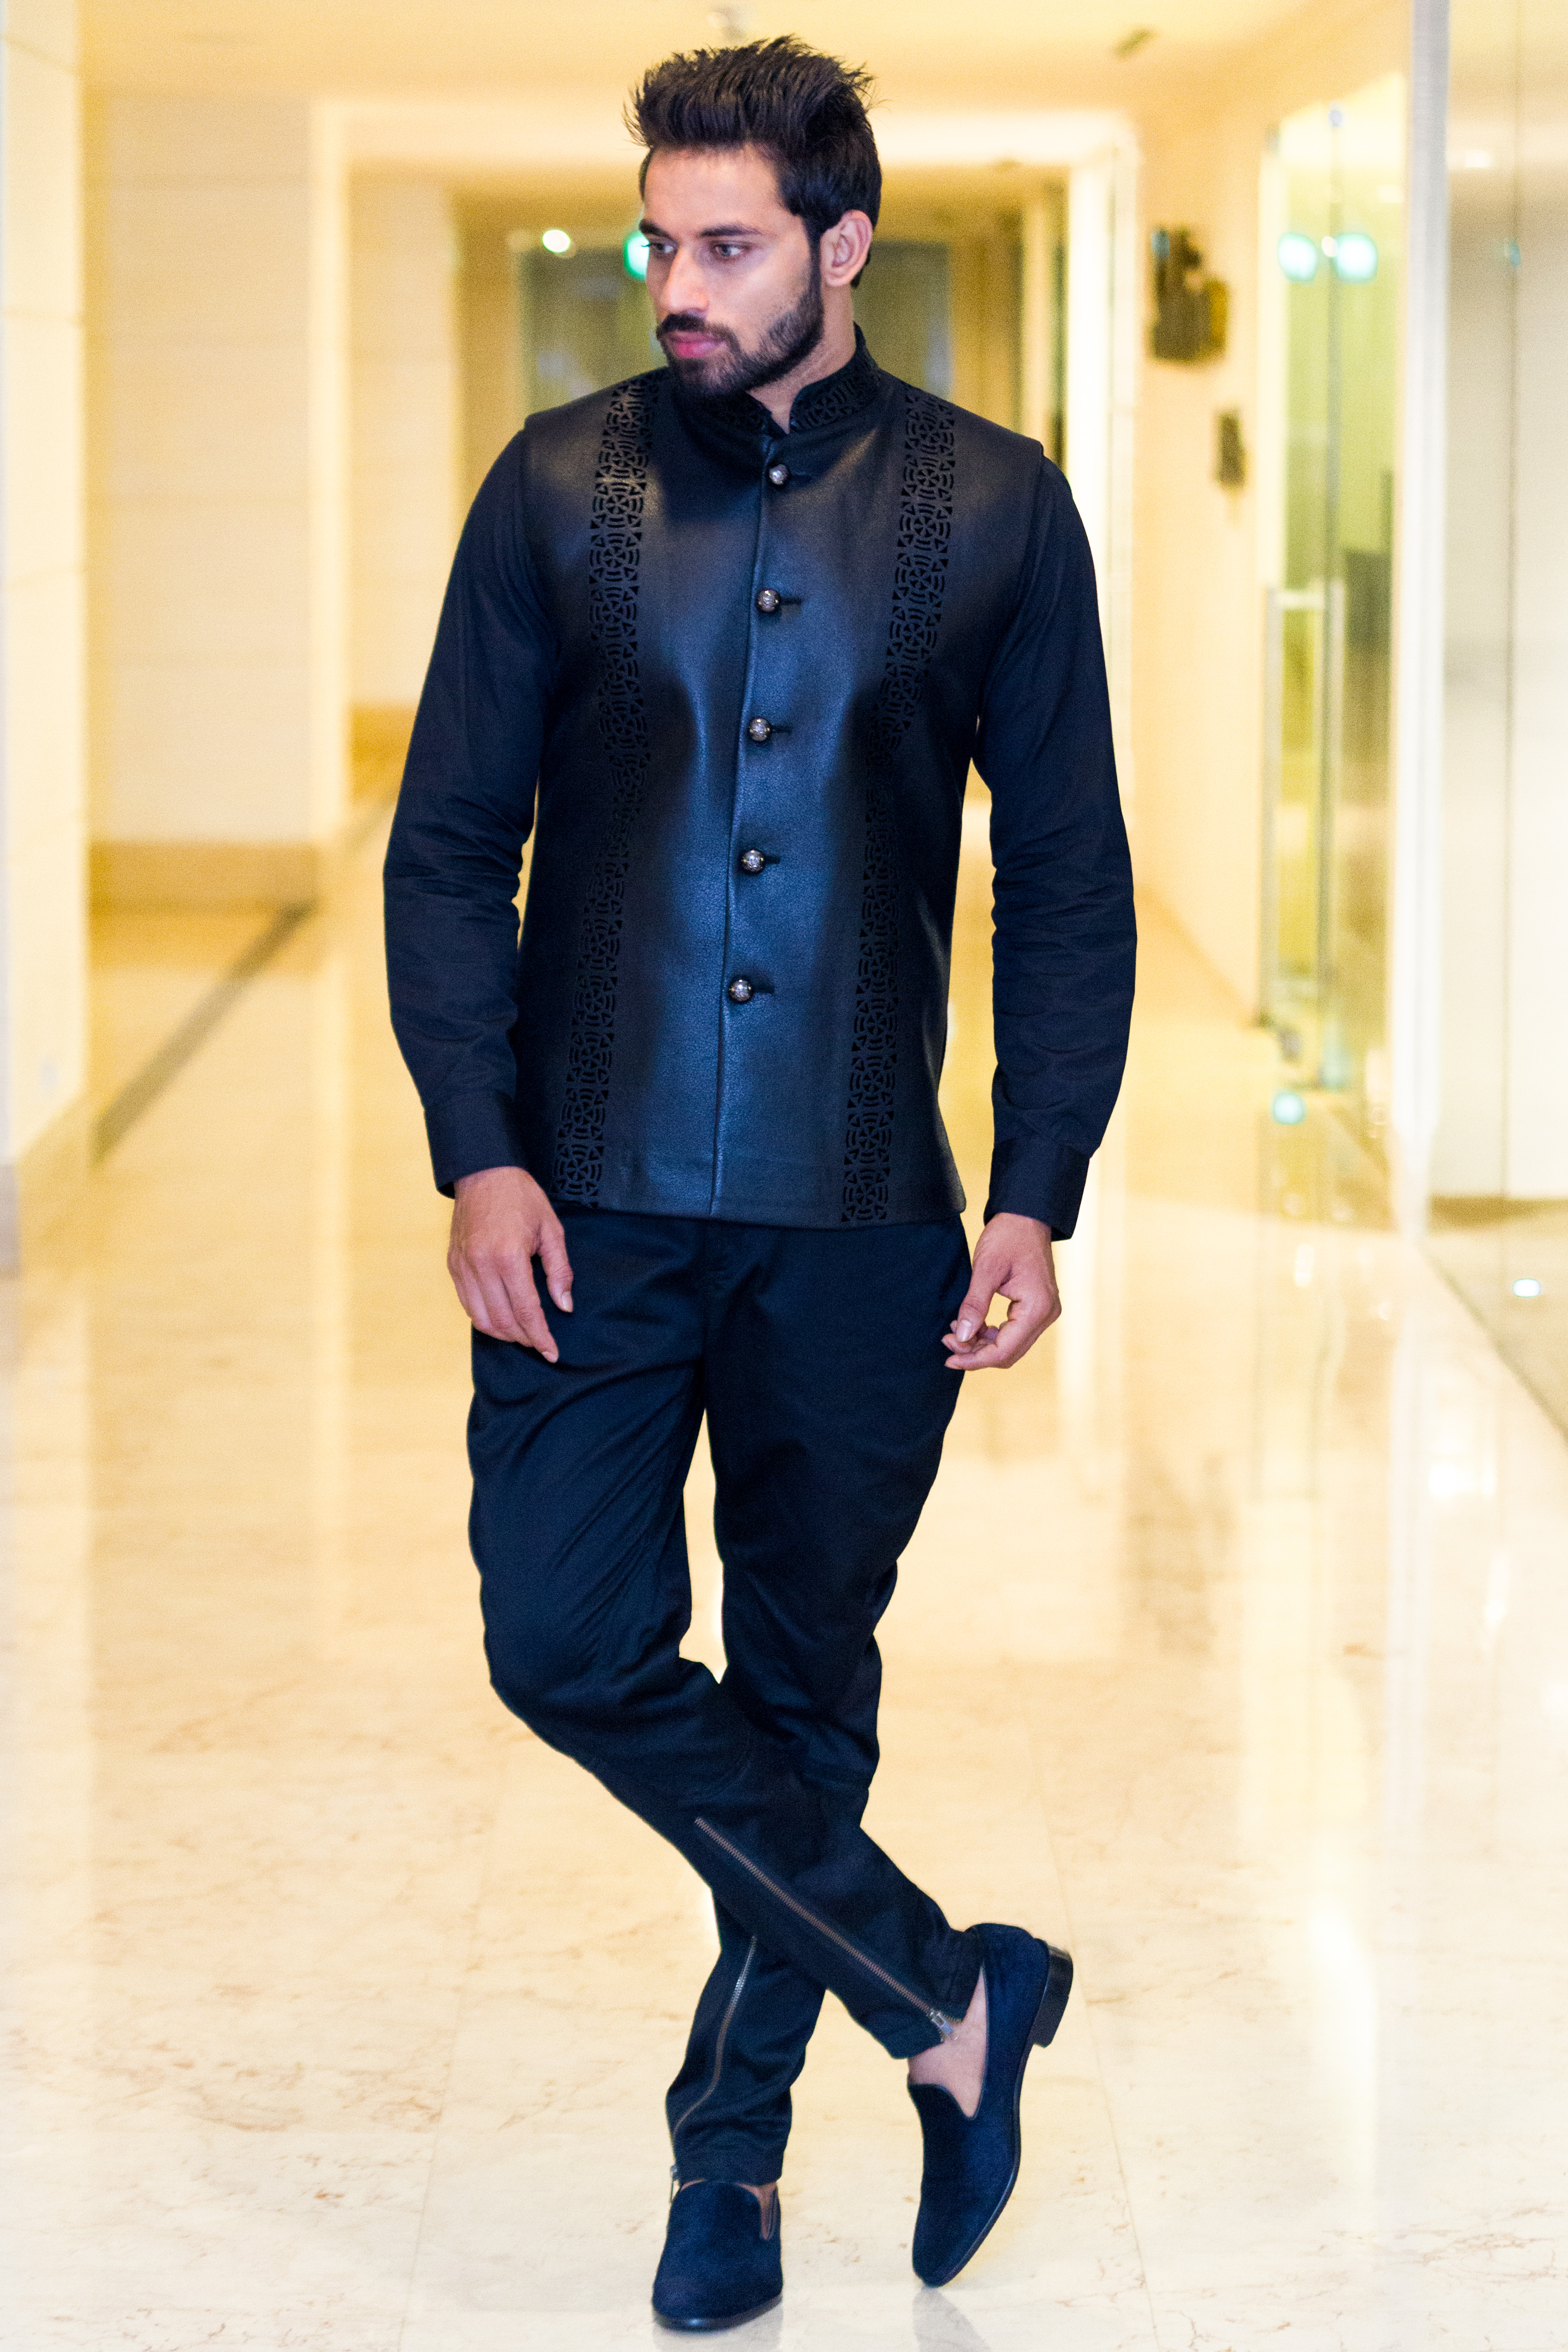 The Classic Leather Jacket Gets an Update | Manoviraj Khosla